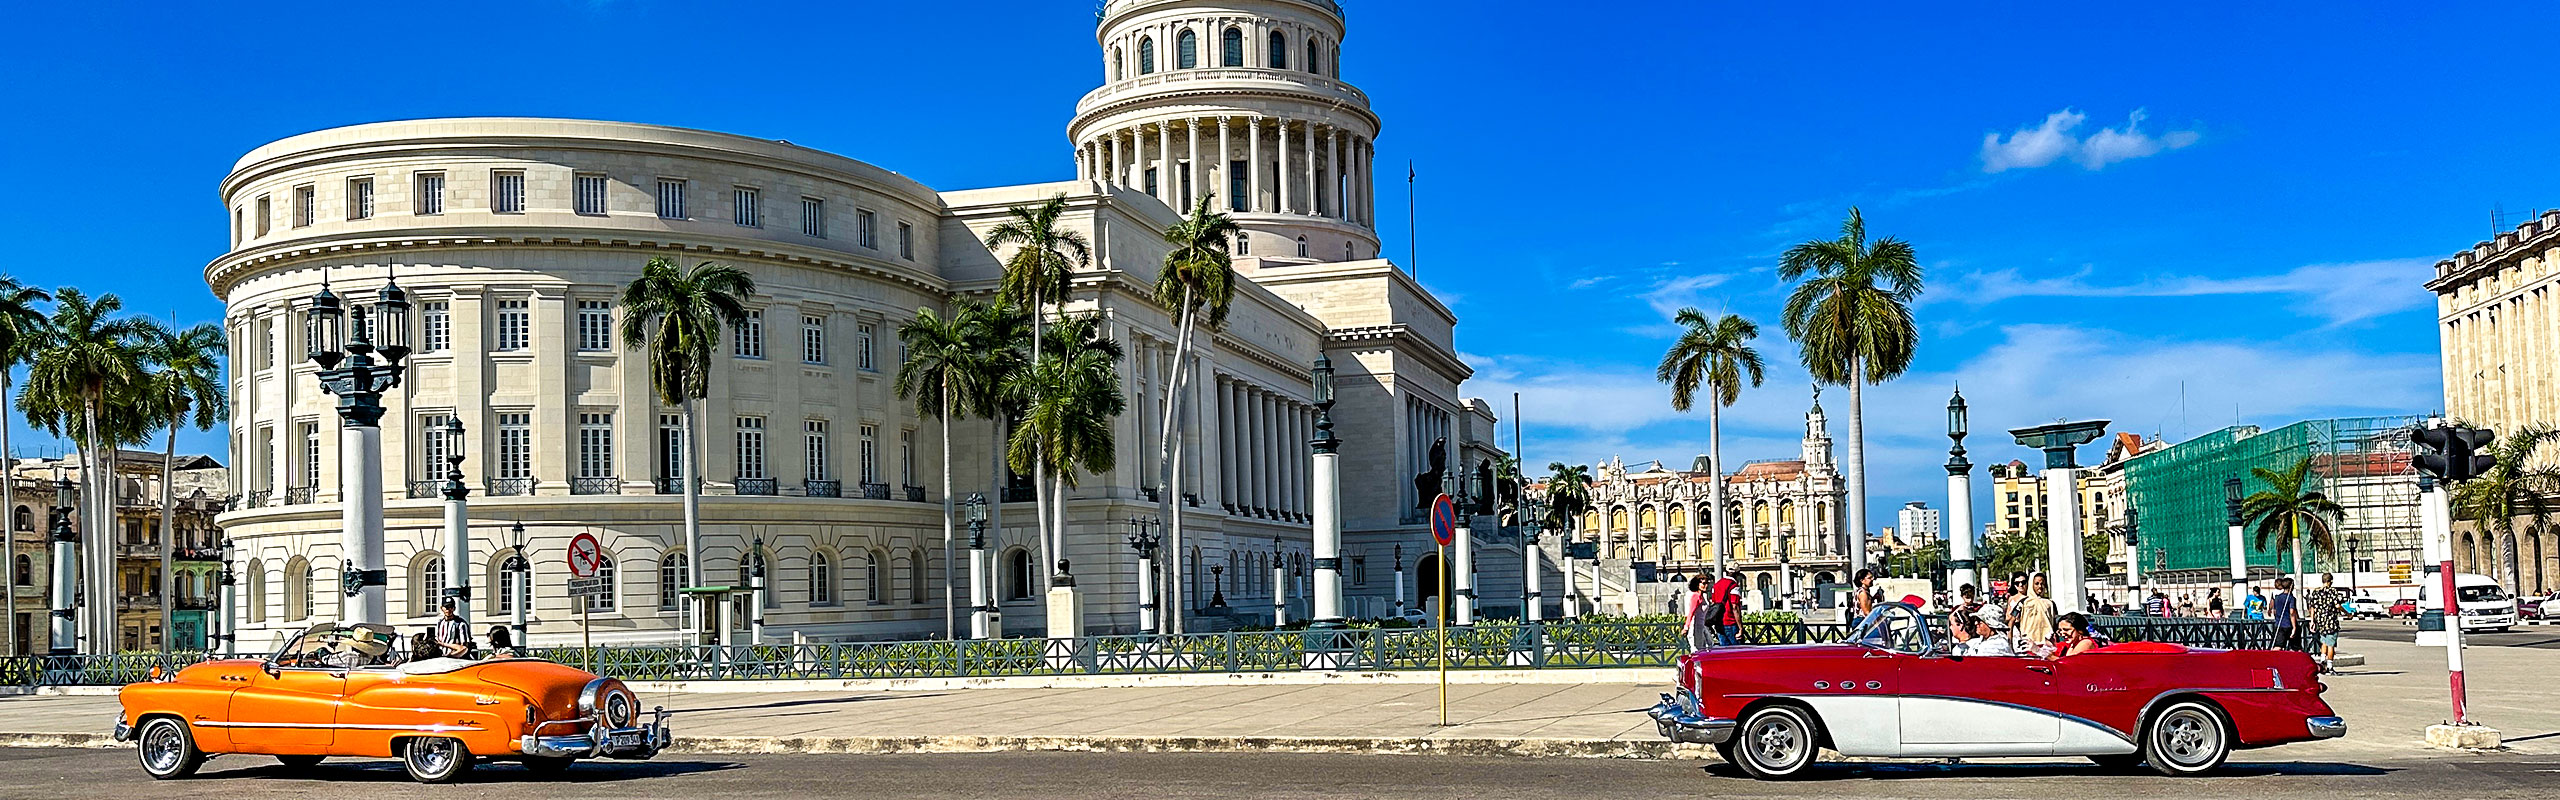 National Capitol of Cuba, Havana